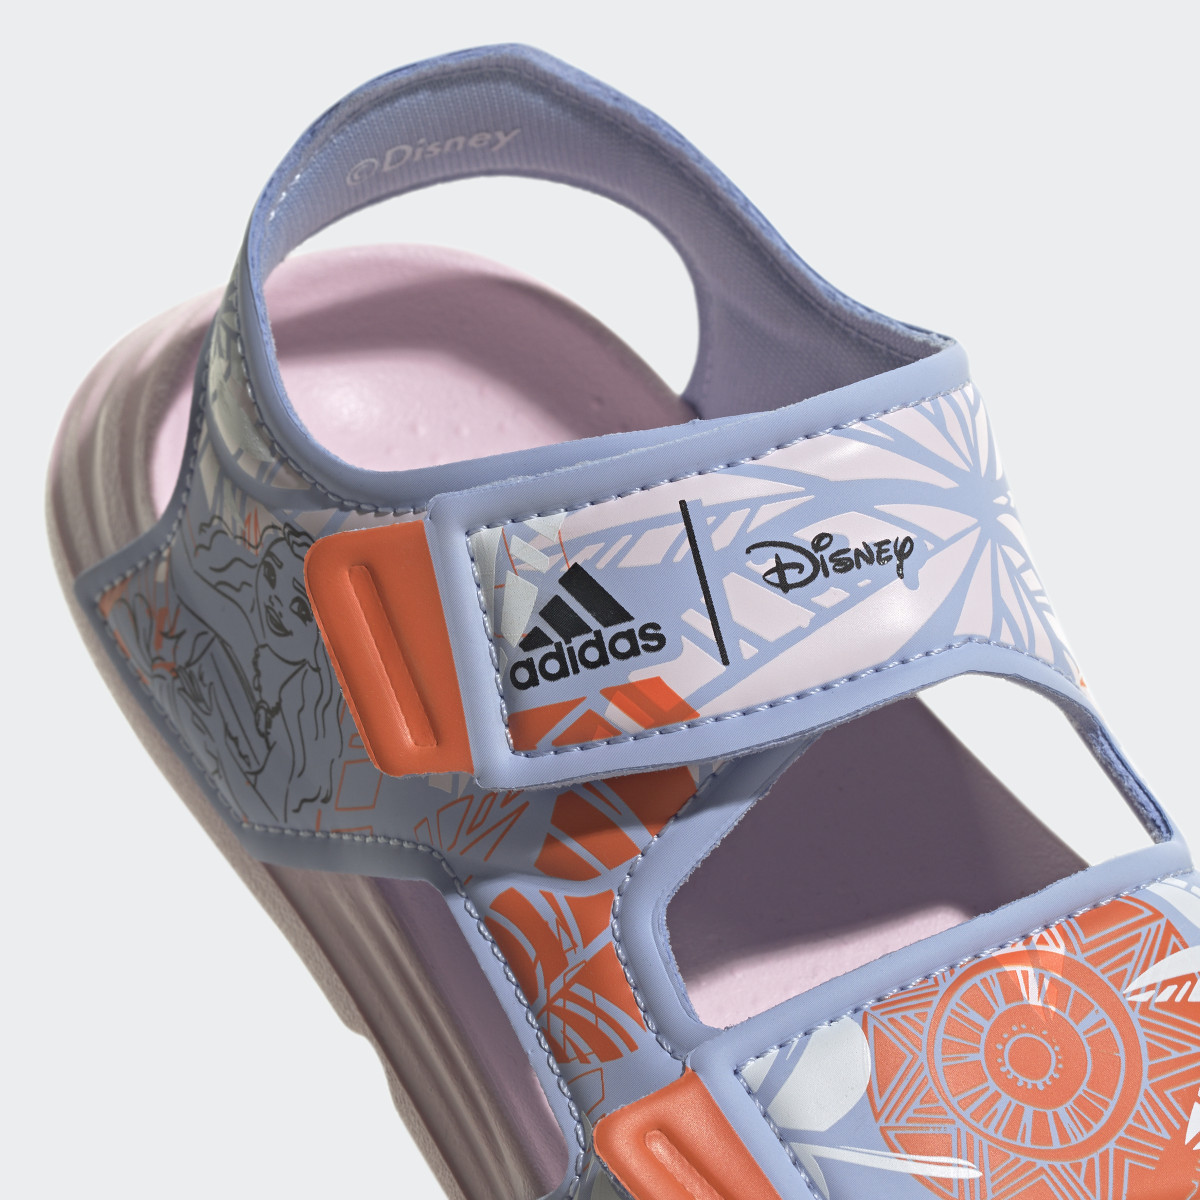 Adidas x Disney AltaSwim Vaiana Swim Sandale. 9